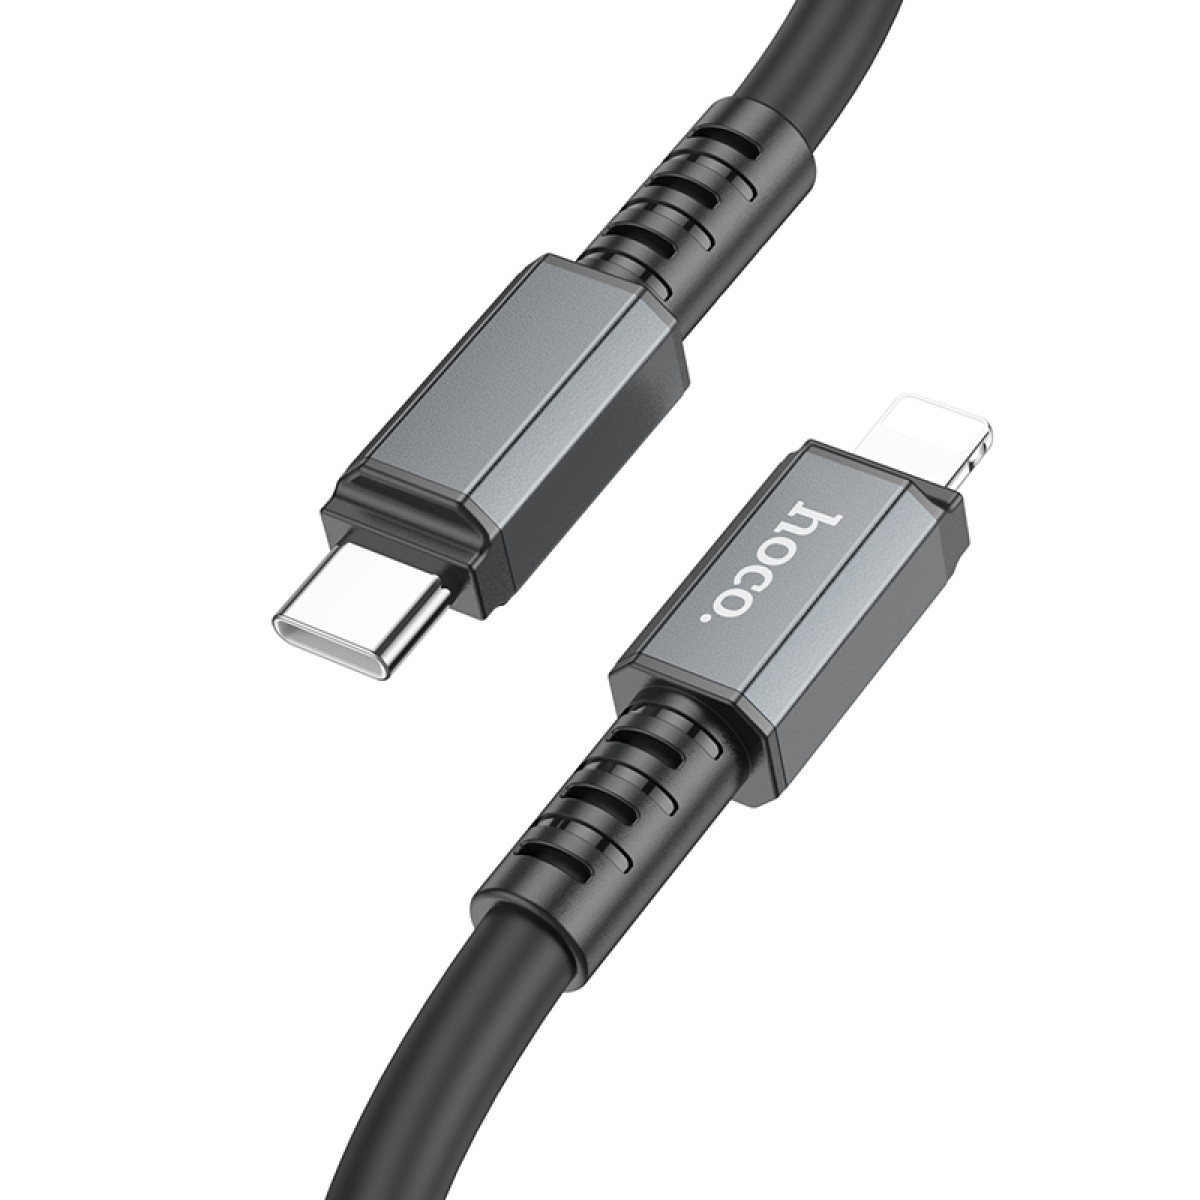 Кабель Hoco X85 iP Strength PD charging data cable